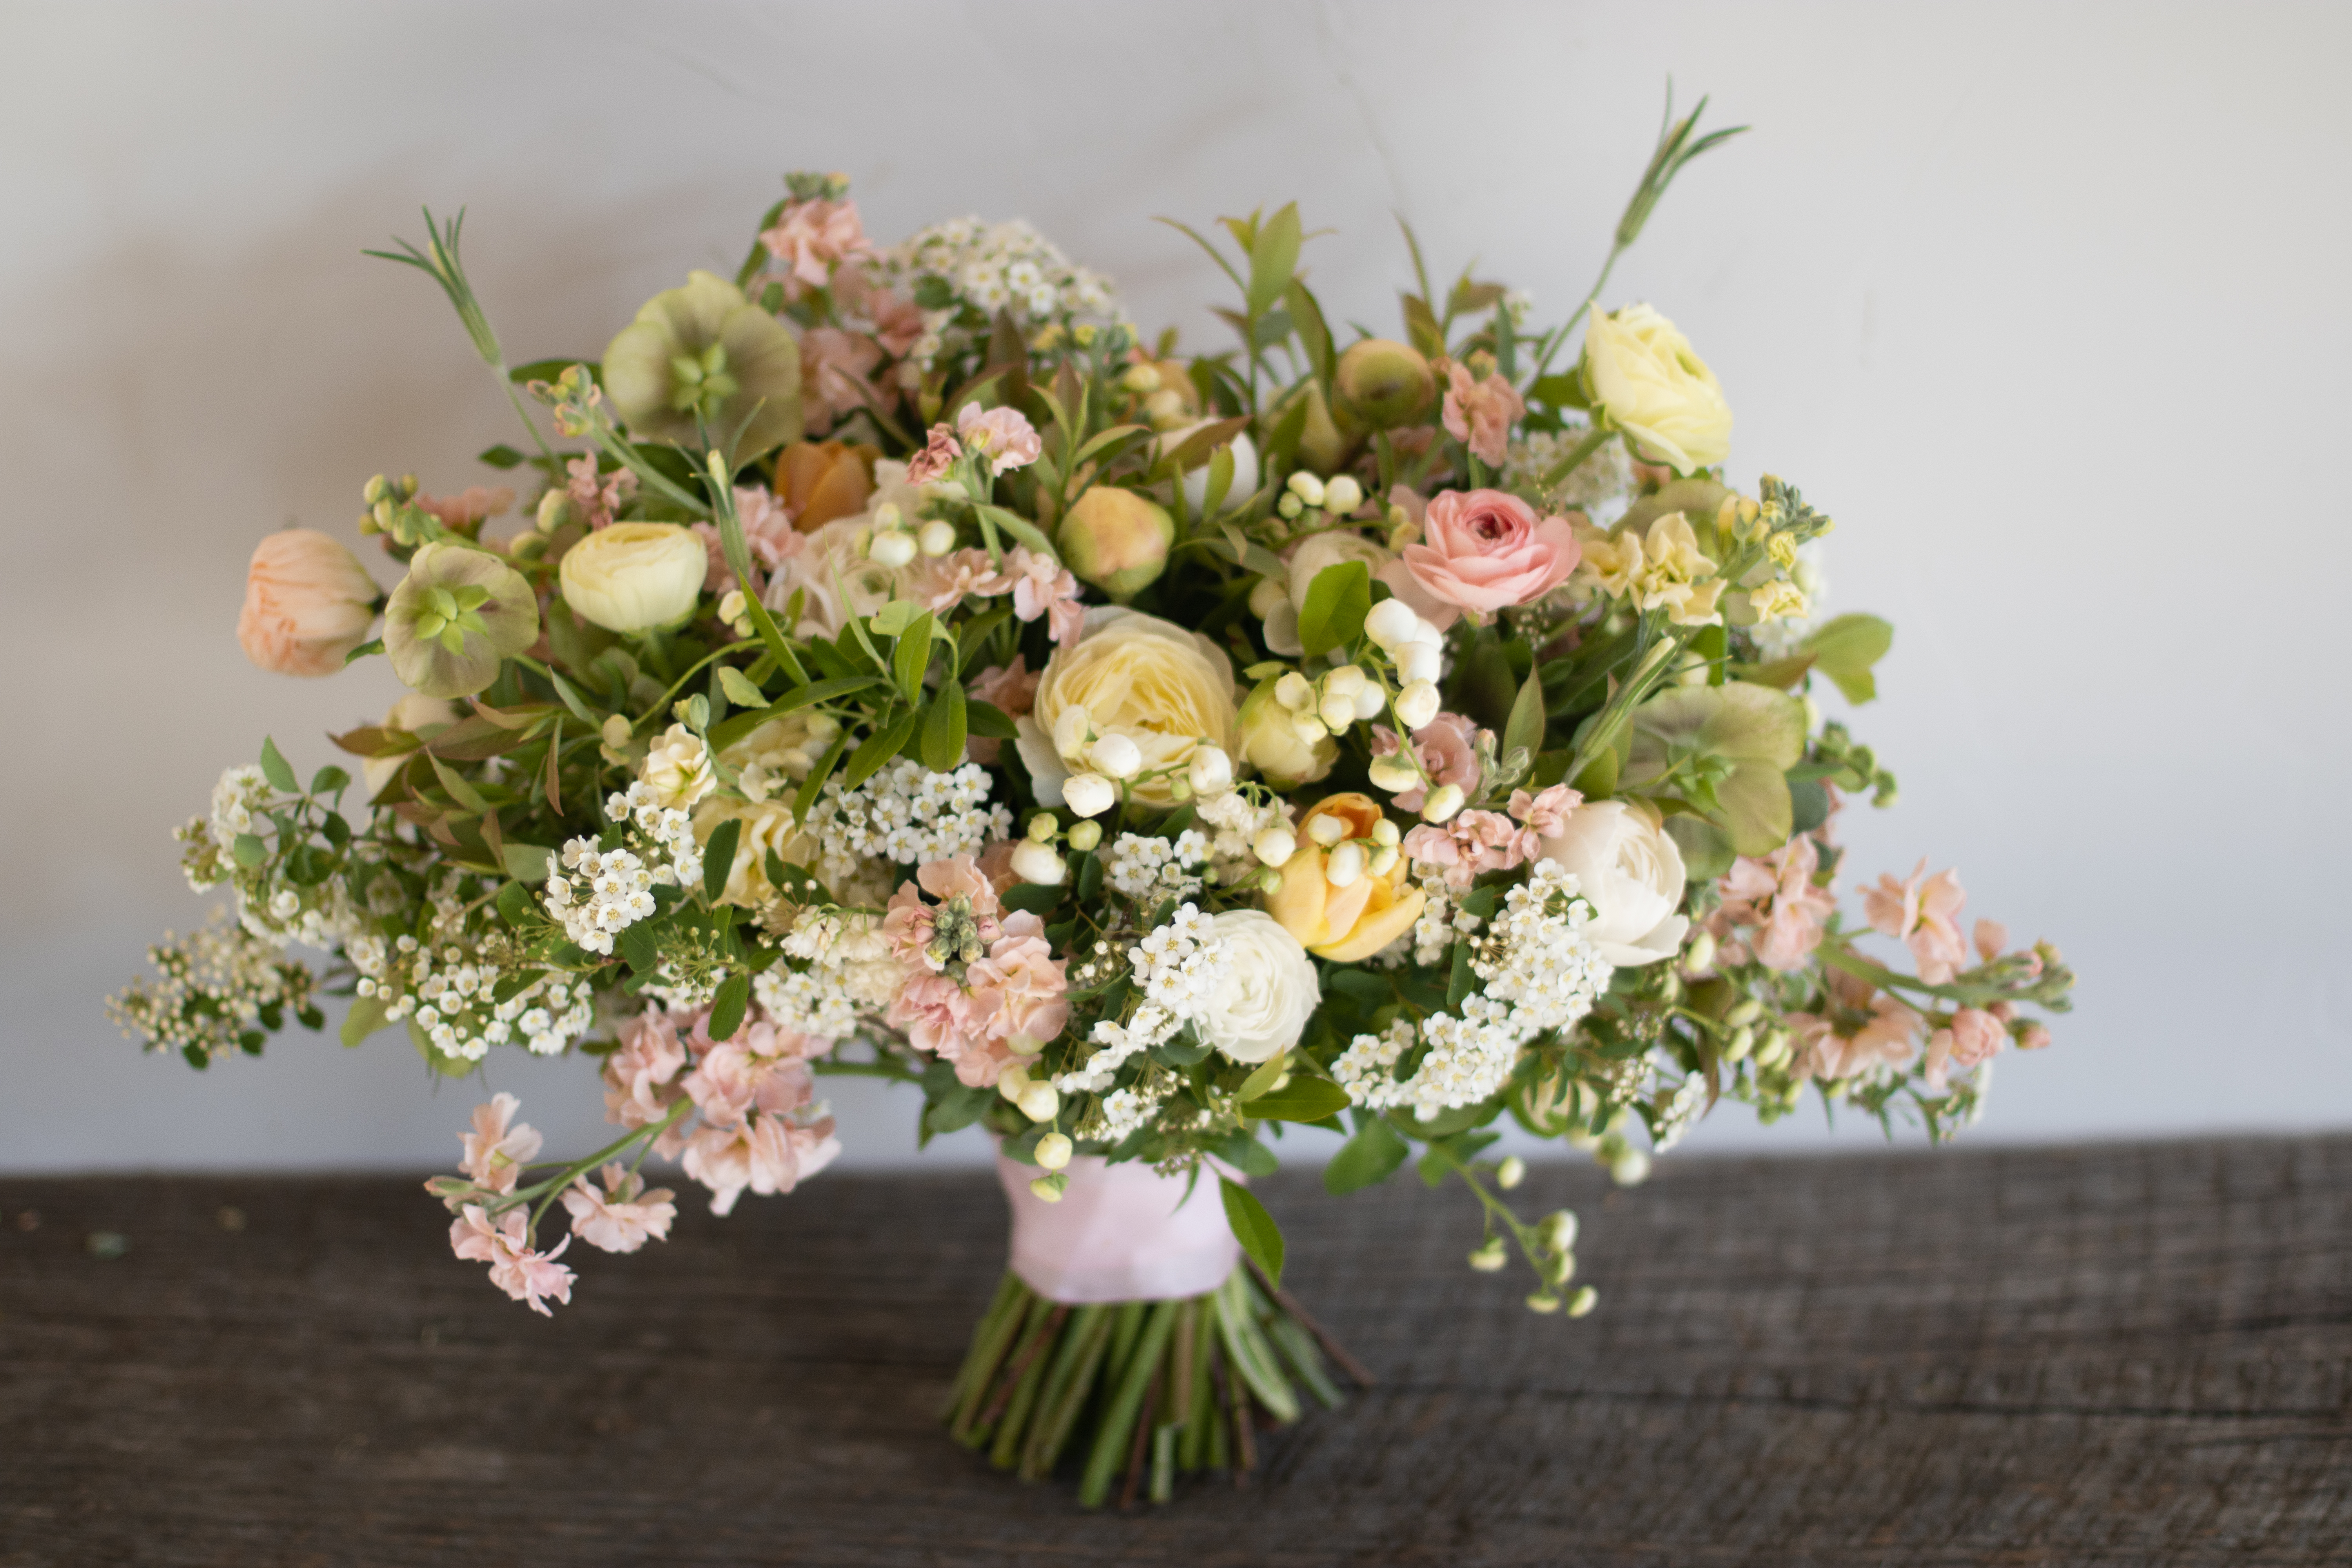 Bridal bouquet grown and designed by Love 'n Fresh Flowers in Philadelphia | Photo by Love 'n Fresh Flowers